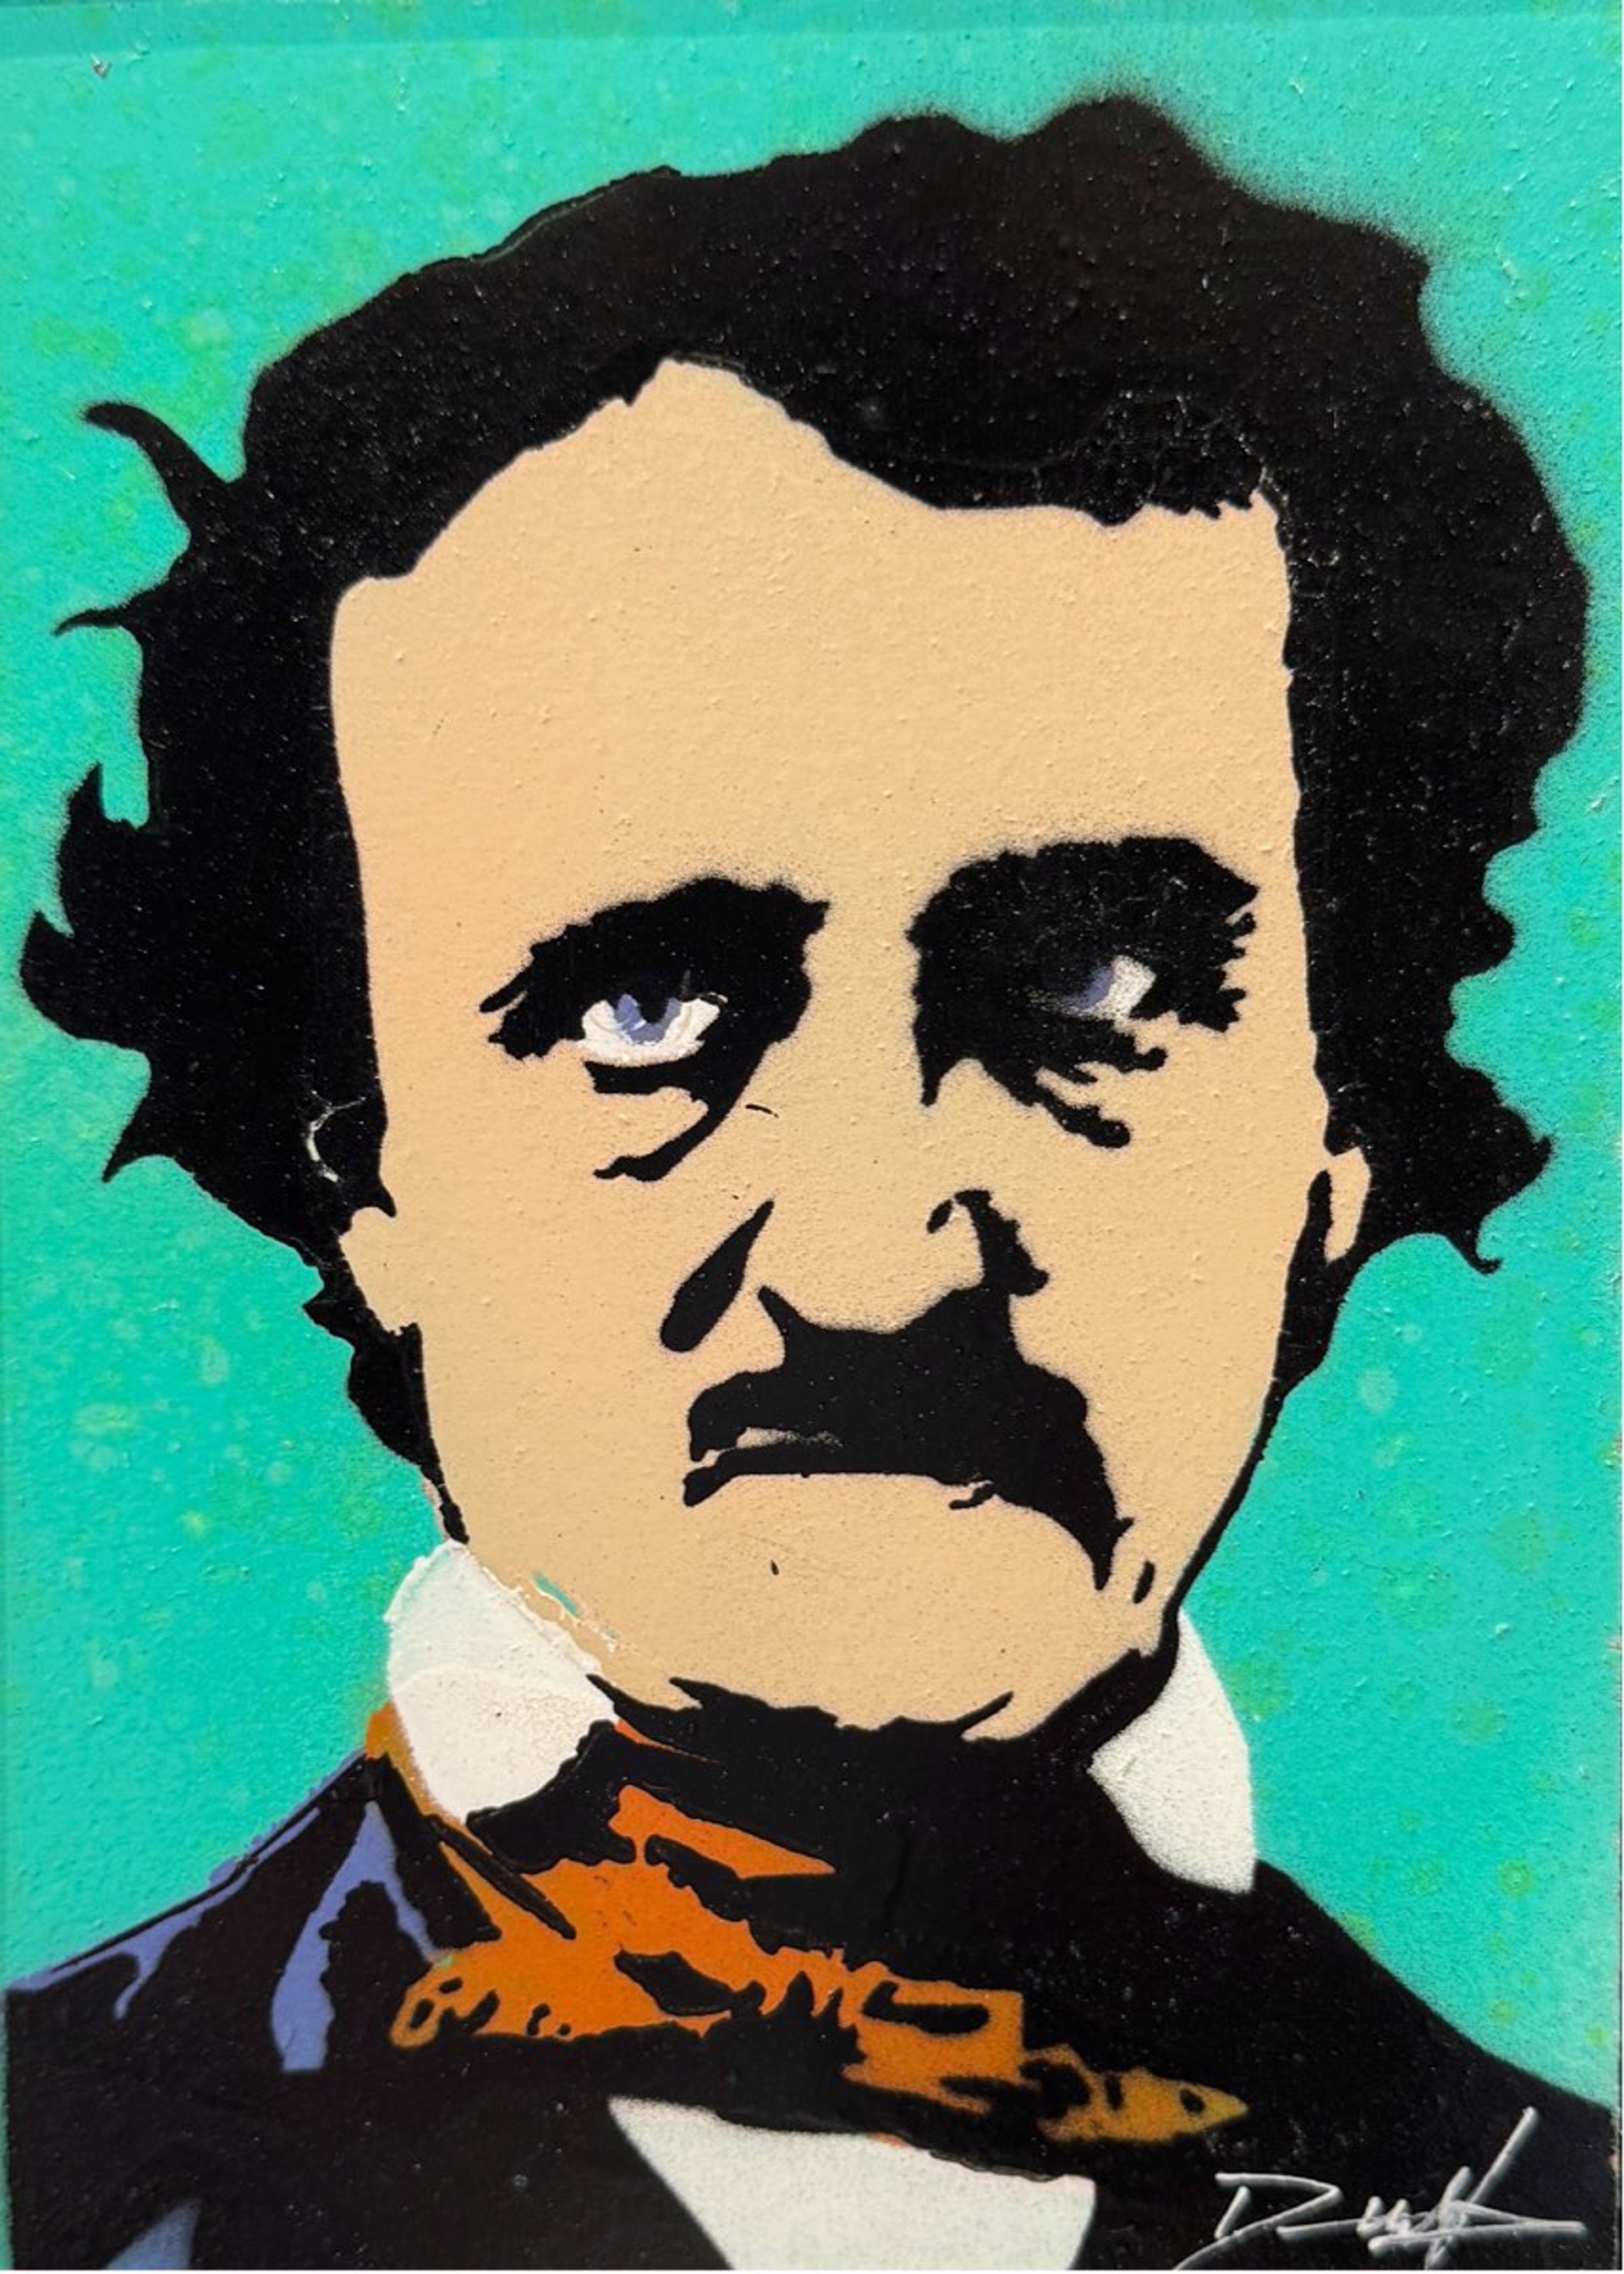 Warhol Poe, Cream on Teal by Dennis Wells